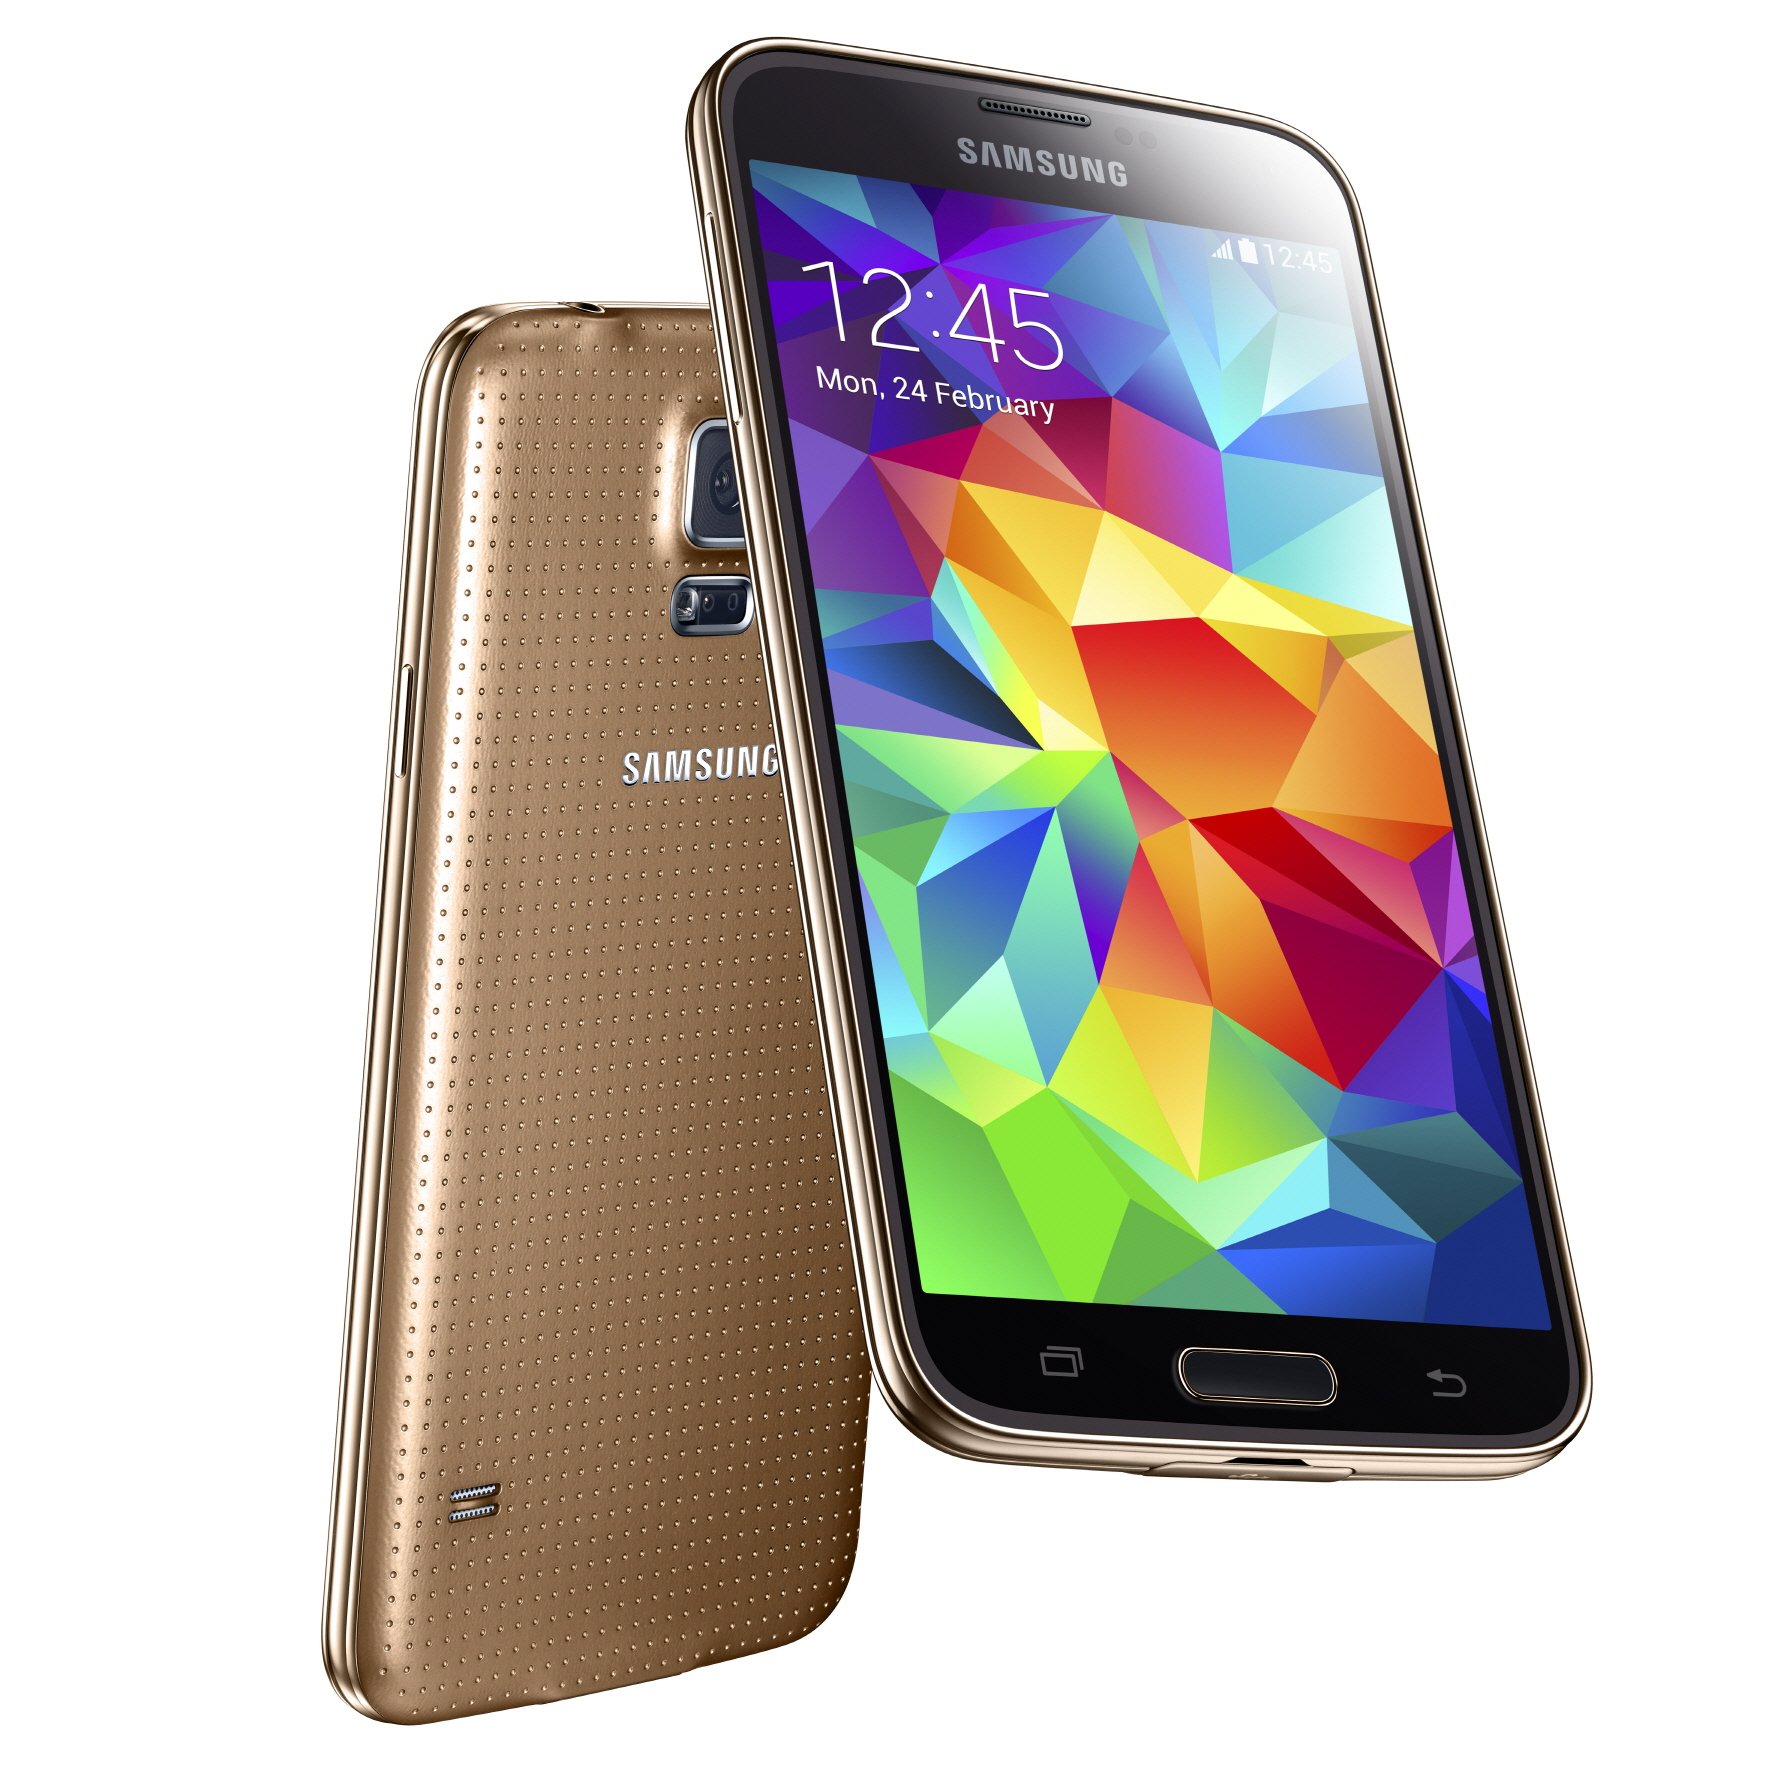 schaamte verwerken veiling Samsung Galaxy S5 Plus technische daten, test, review, vergleich -  PhonesData